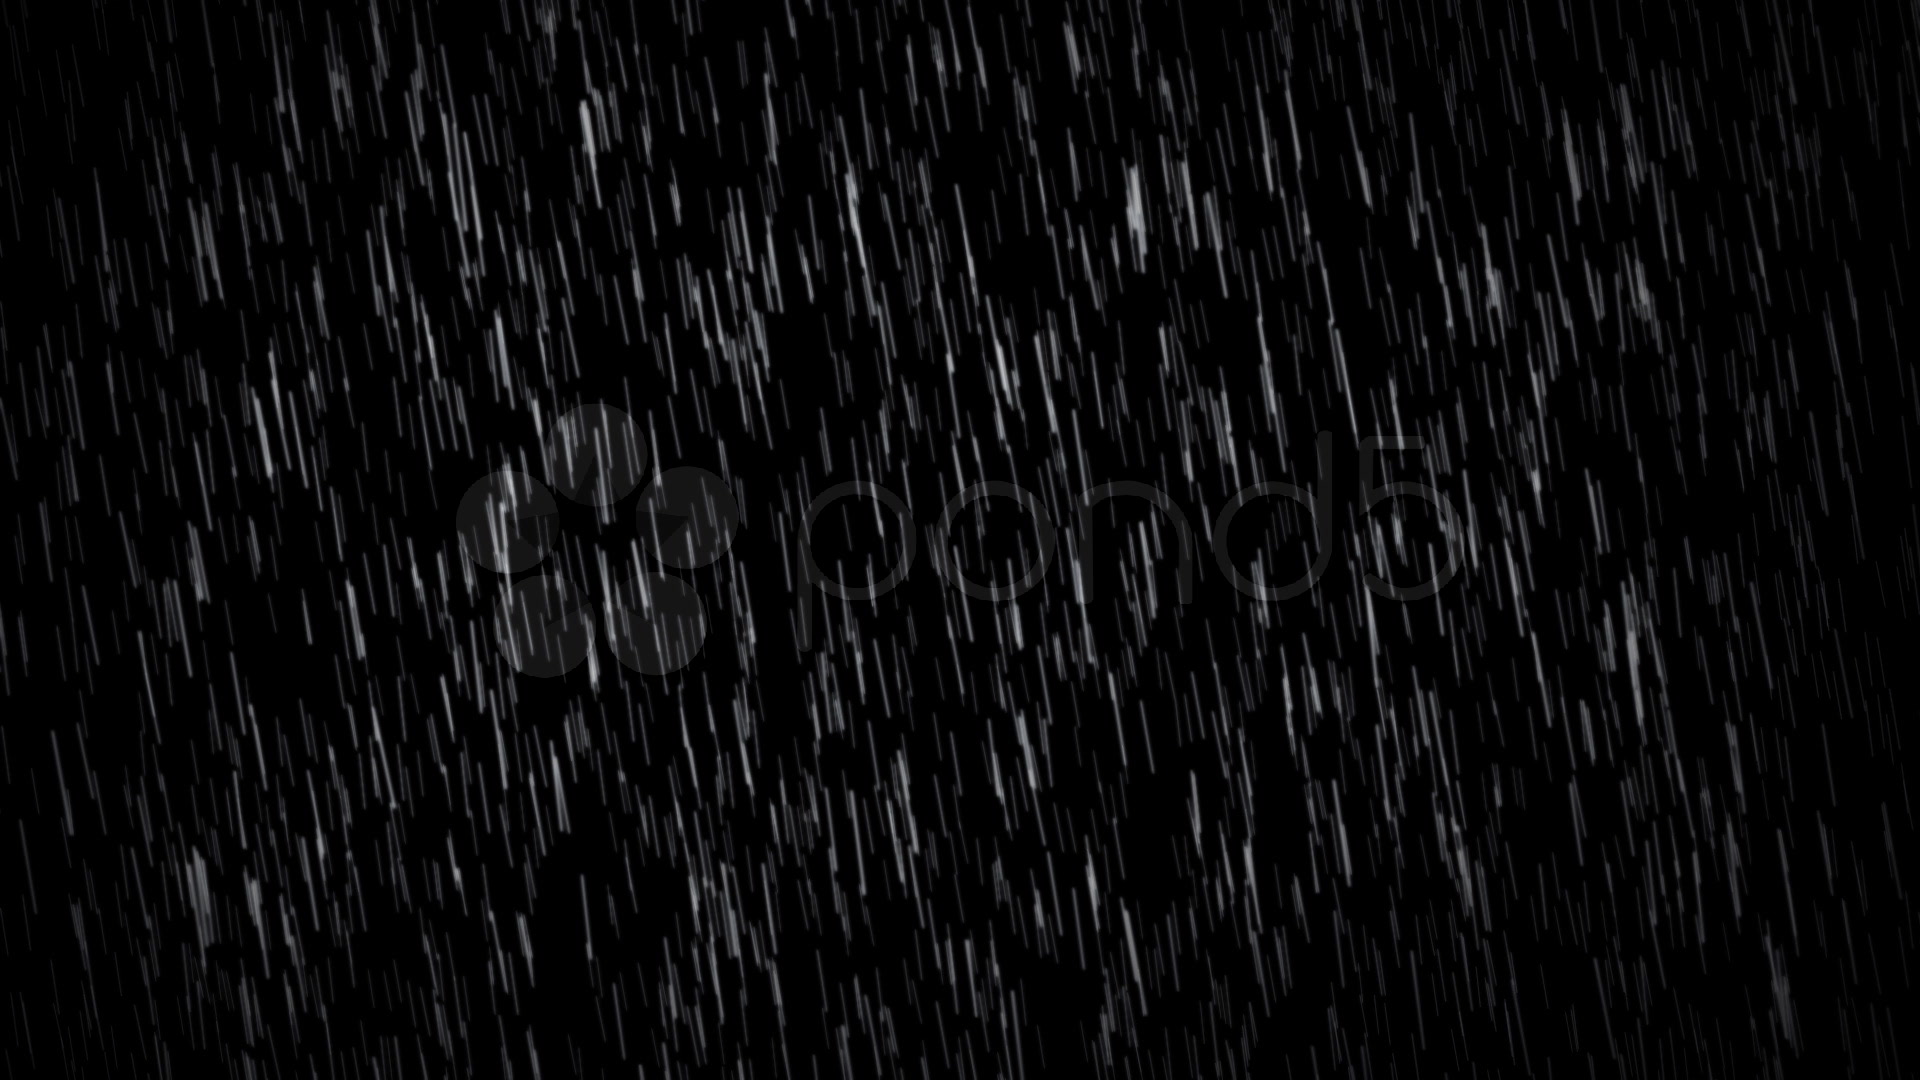 Particle rain. Дождь на черном фоне. Текстура дождя. Эффект дождя. Ливень на черном фоне.